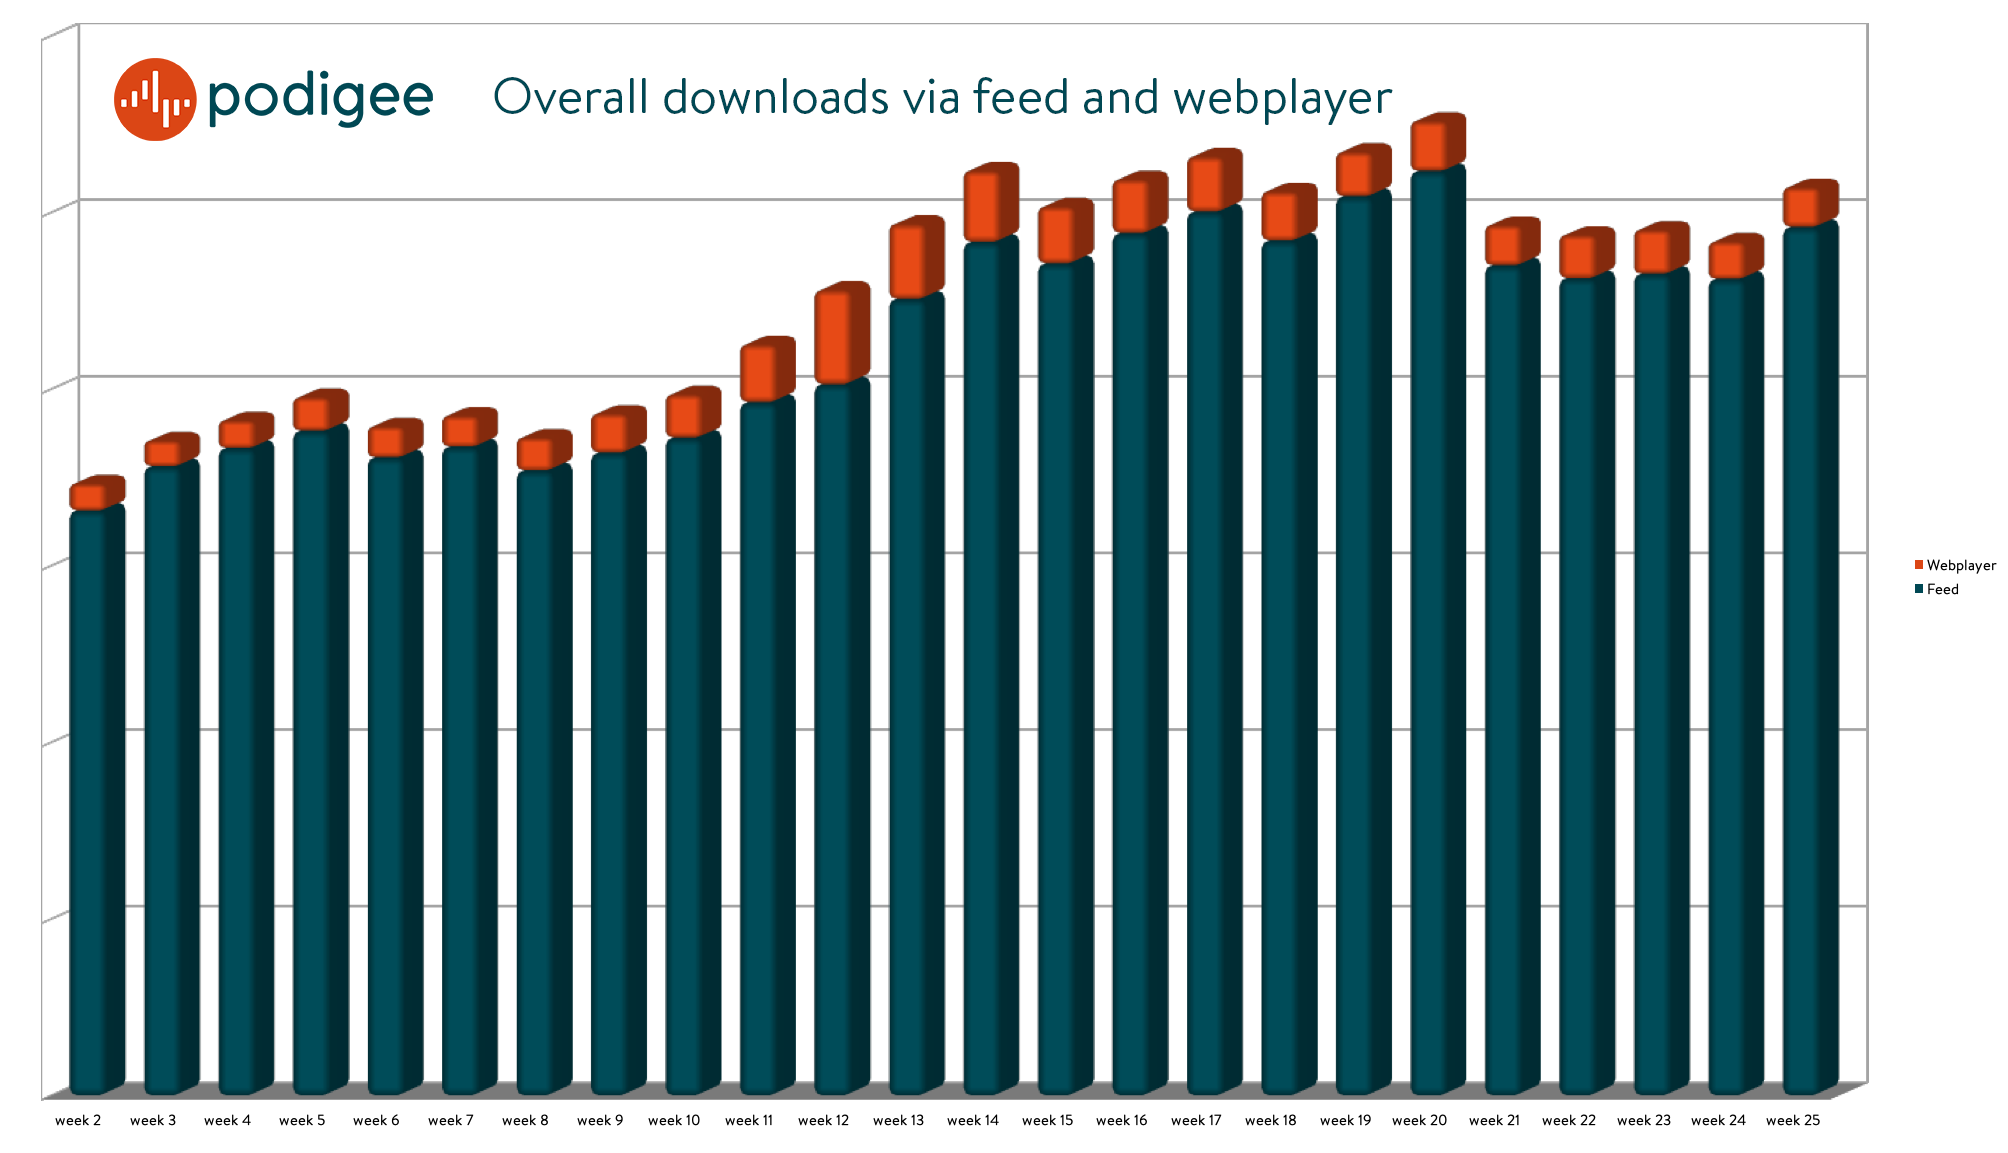 Downloads: Feed vs. Webplayer